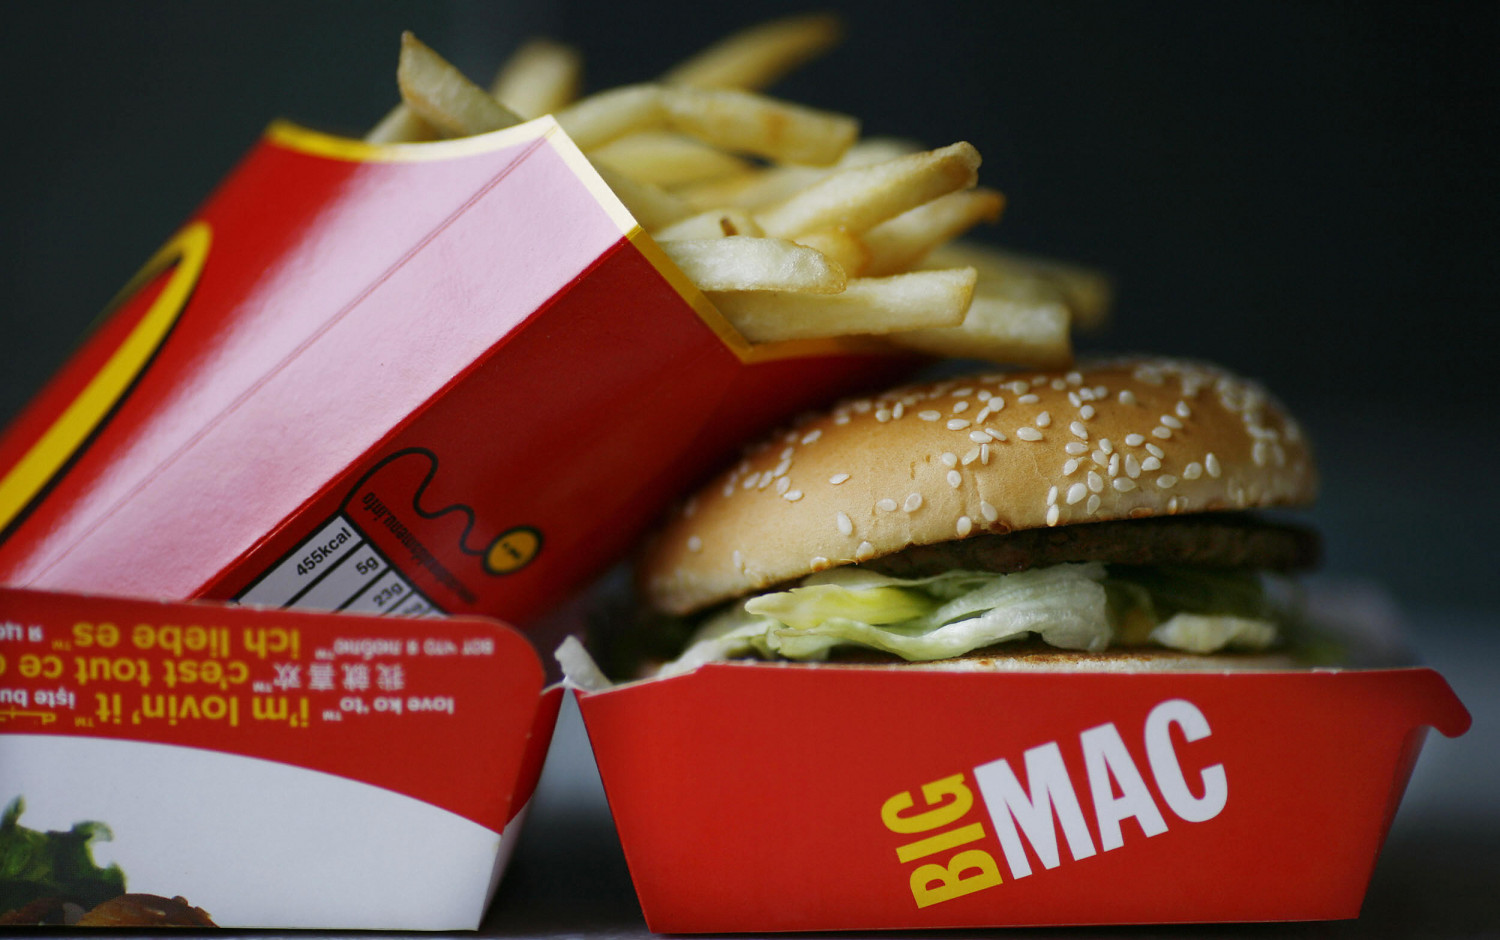 McDonald’s Touchscreen Kiosks Contaminated with Fecal Bacteria, According to UK Report